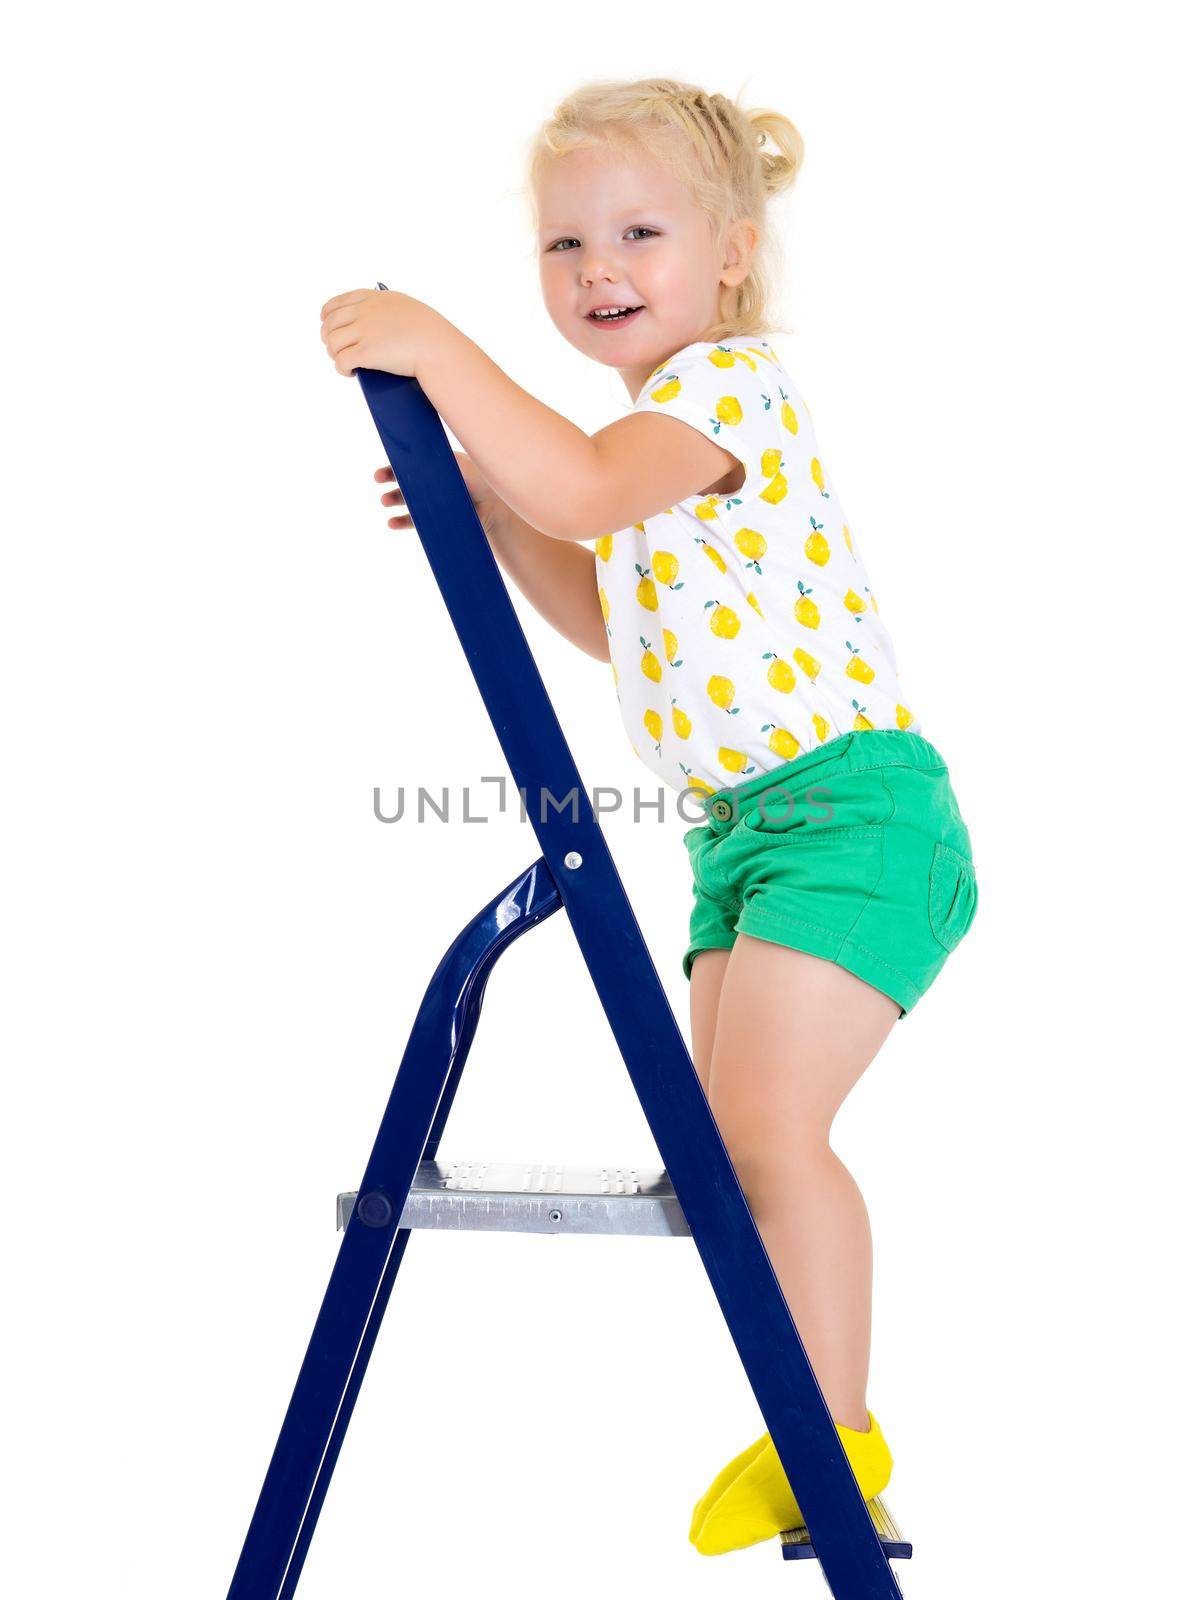 A little girl climbs the ladder. by kolesnikov_studio